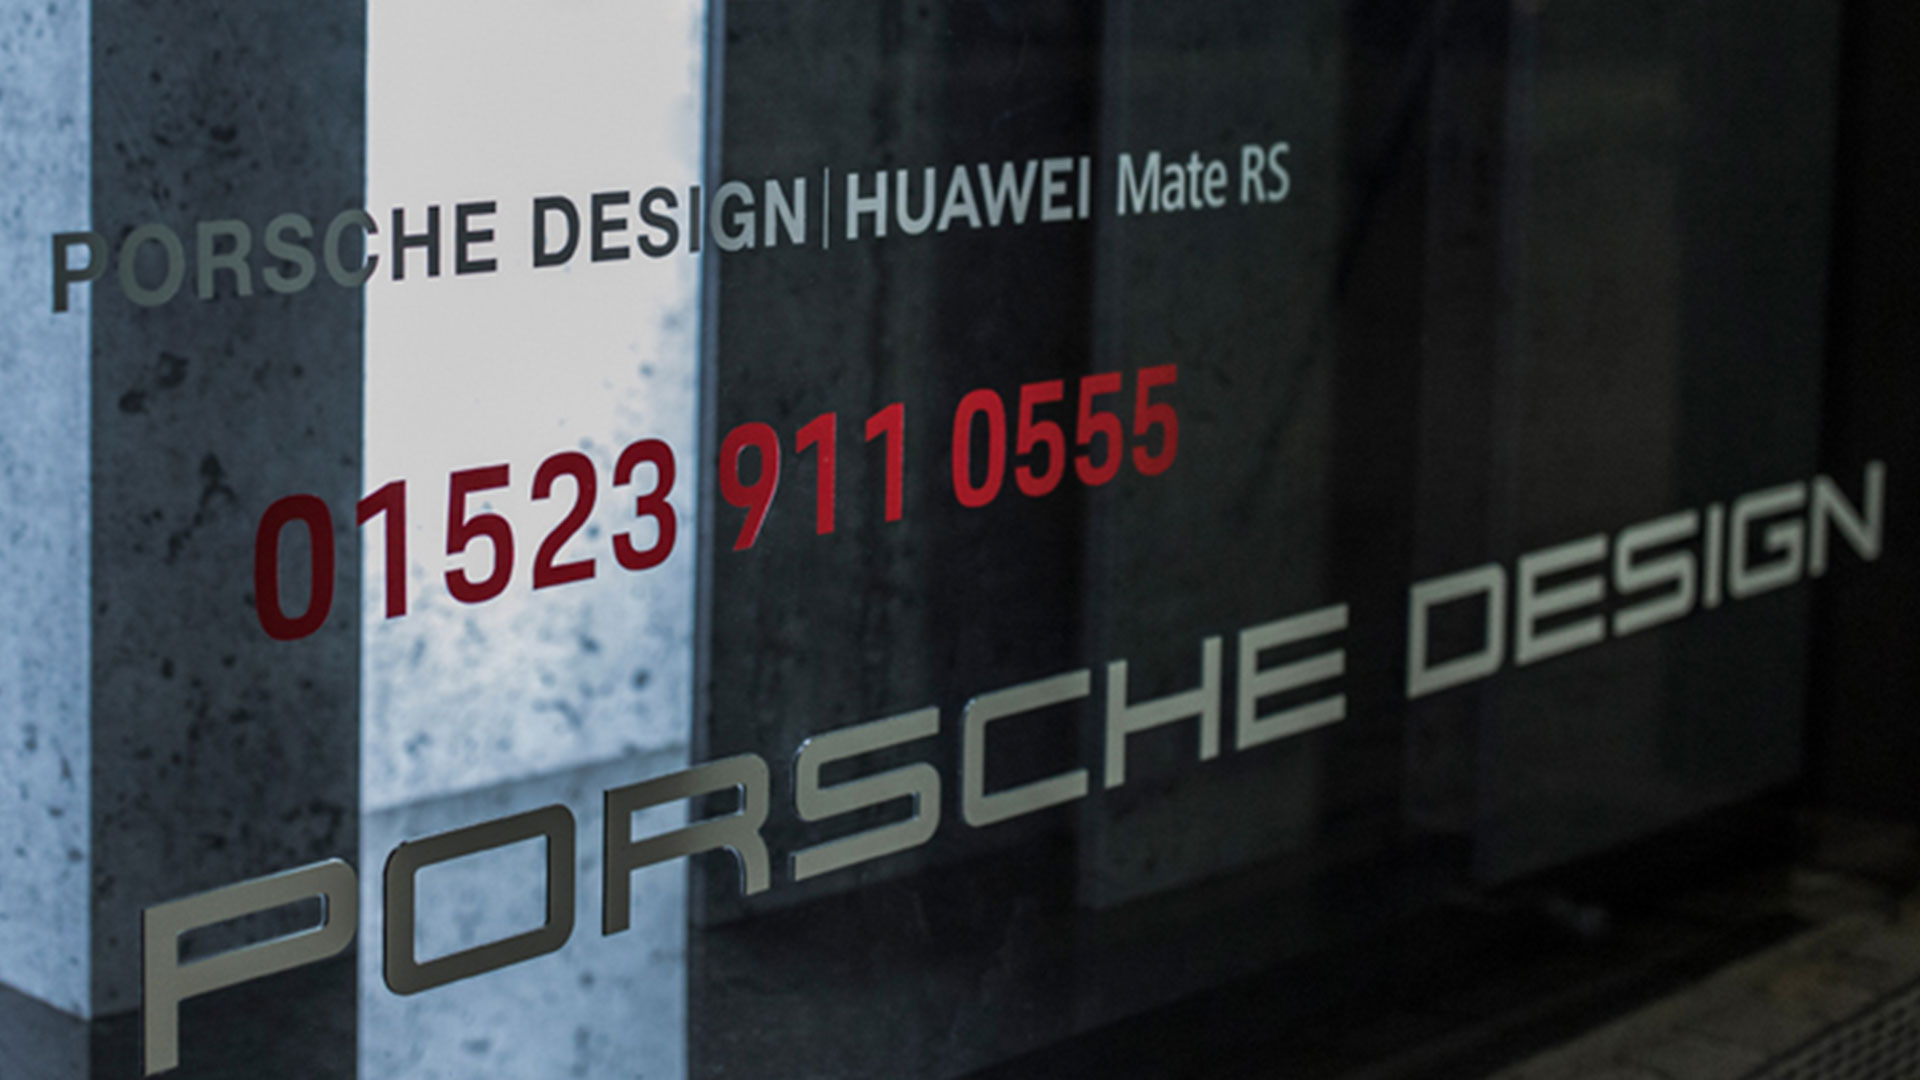 DFROST, Porsche Design x Huawei, Window Campaigns, Window Campaign, POS Campaign, Window Rollout, Retail Marketing Campaign, Community Activation, POS Activation, Digital Cases, Mobile phone, Huawei